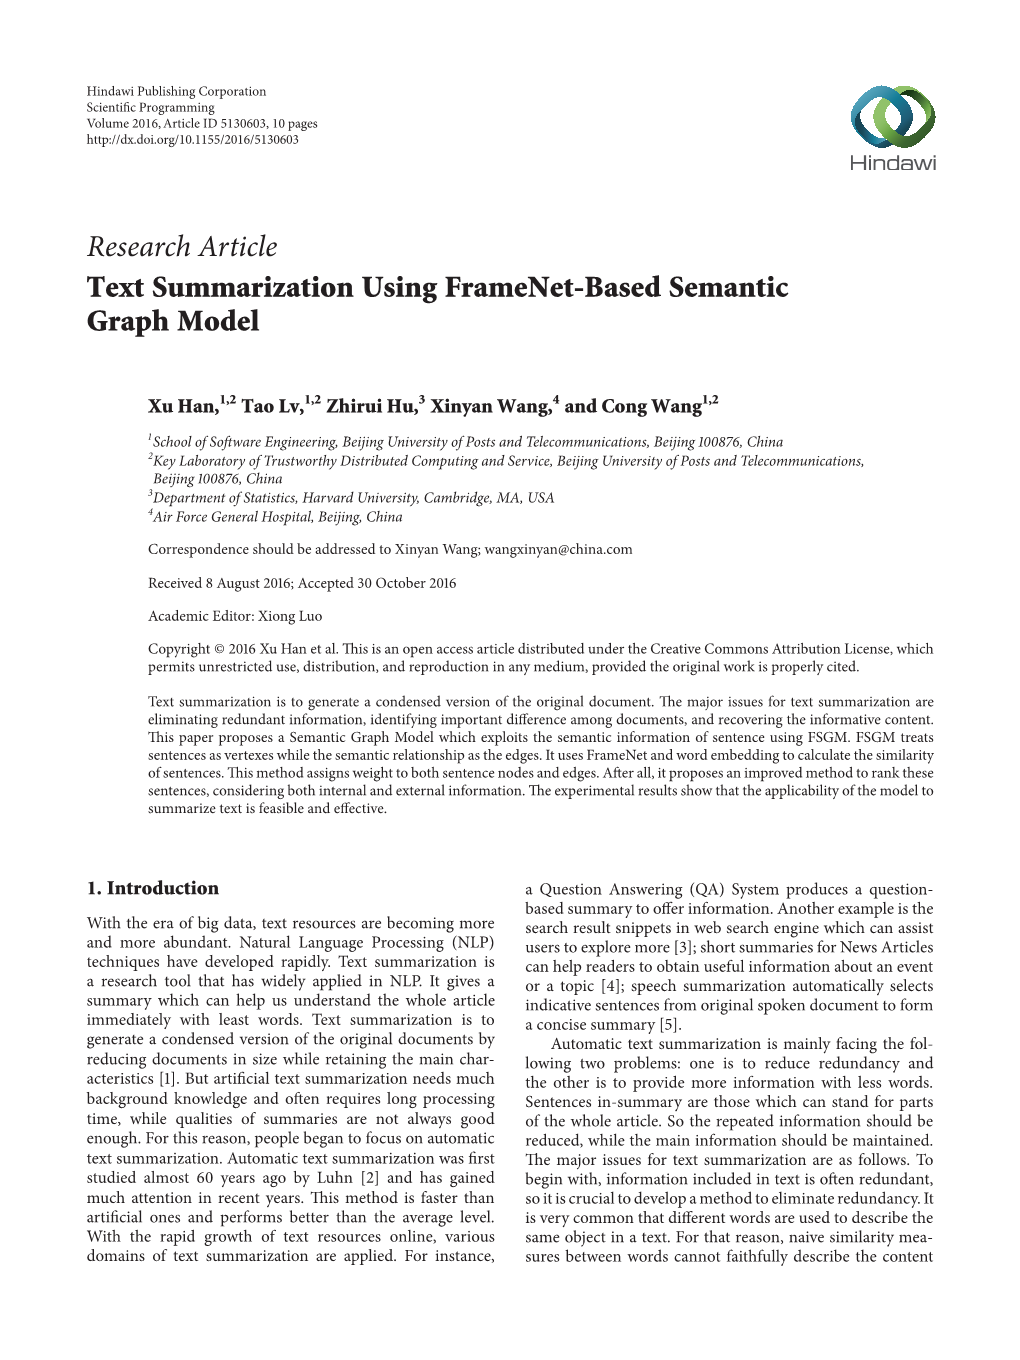 Text Summarization Using Framenet-Based Semantic Graph Model